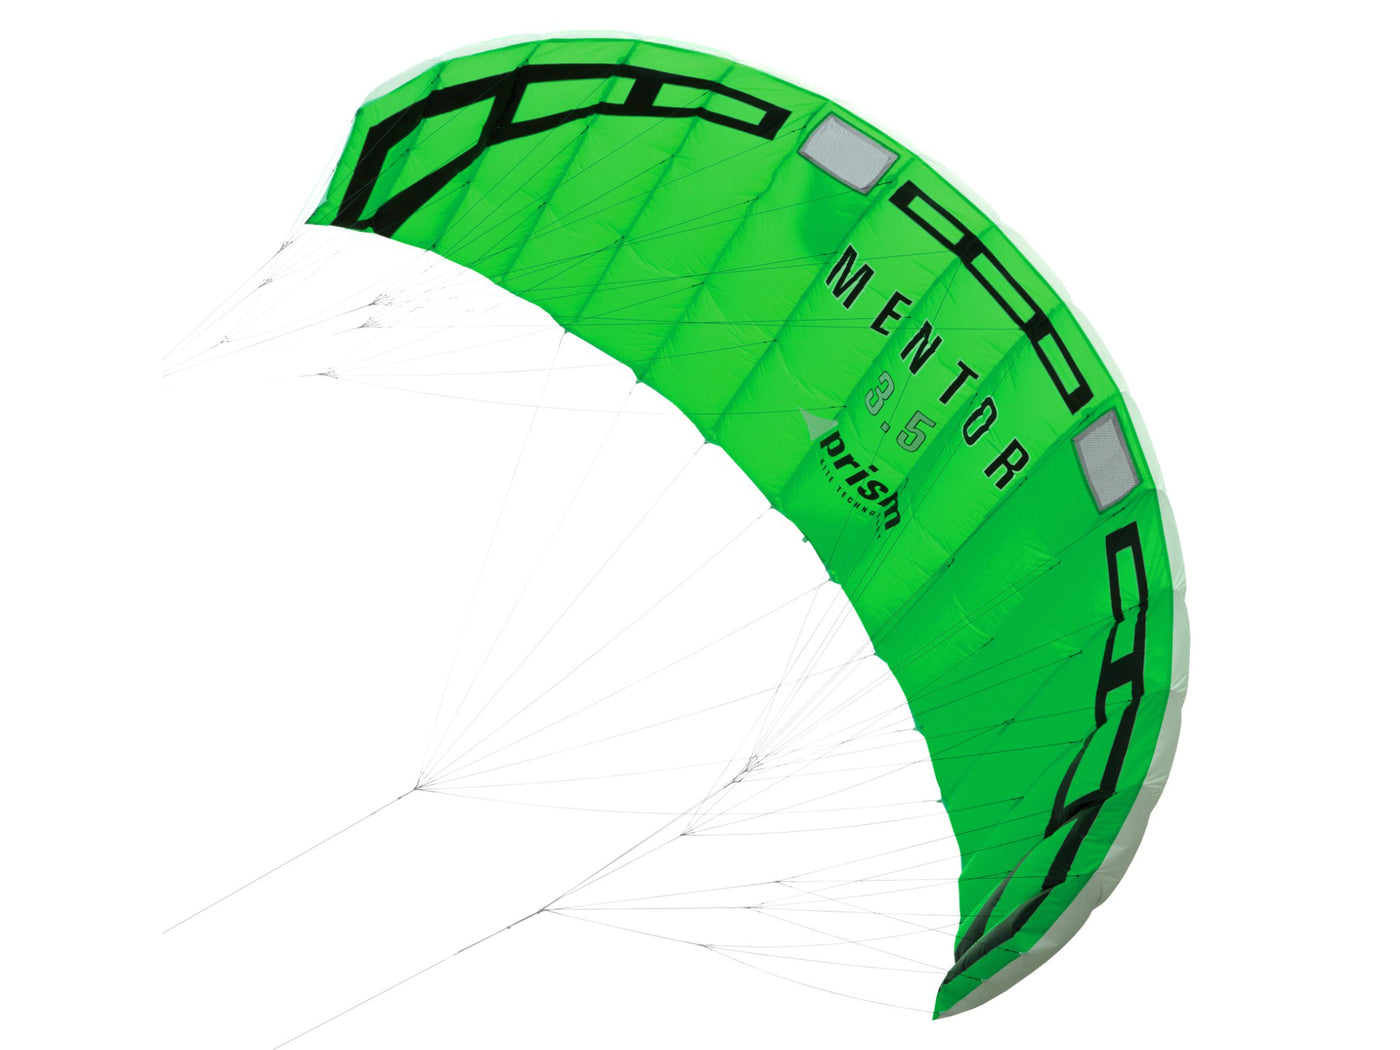 Mentor 3.5 power kite on white background